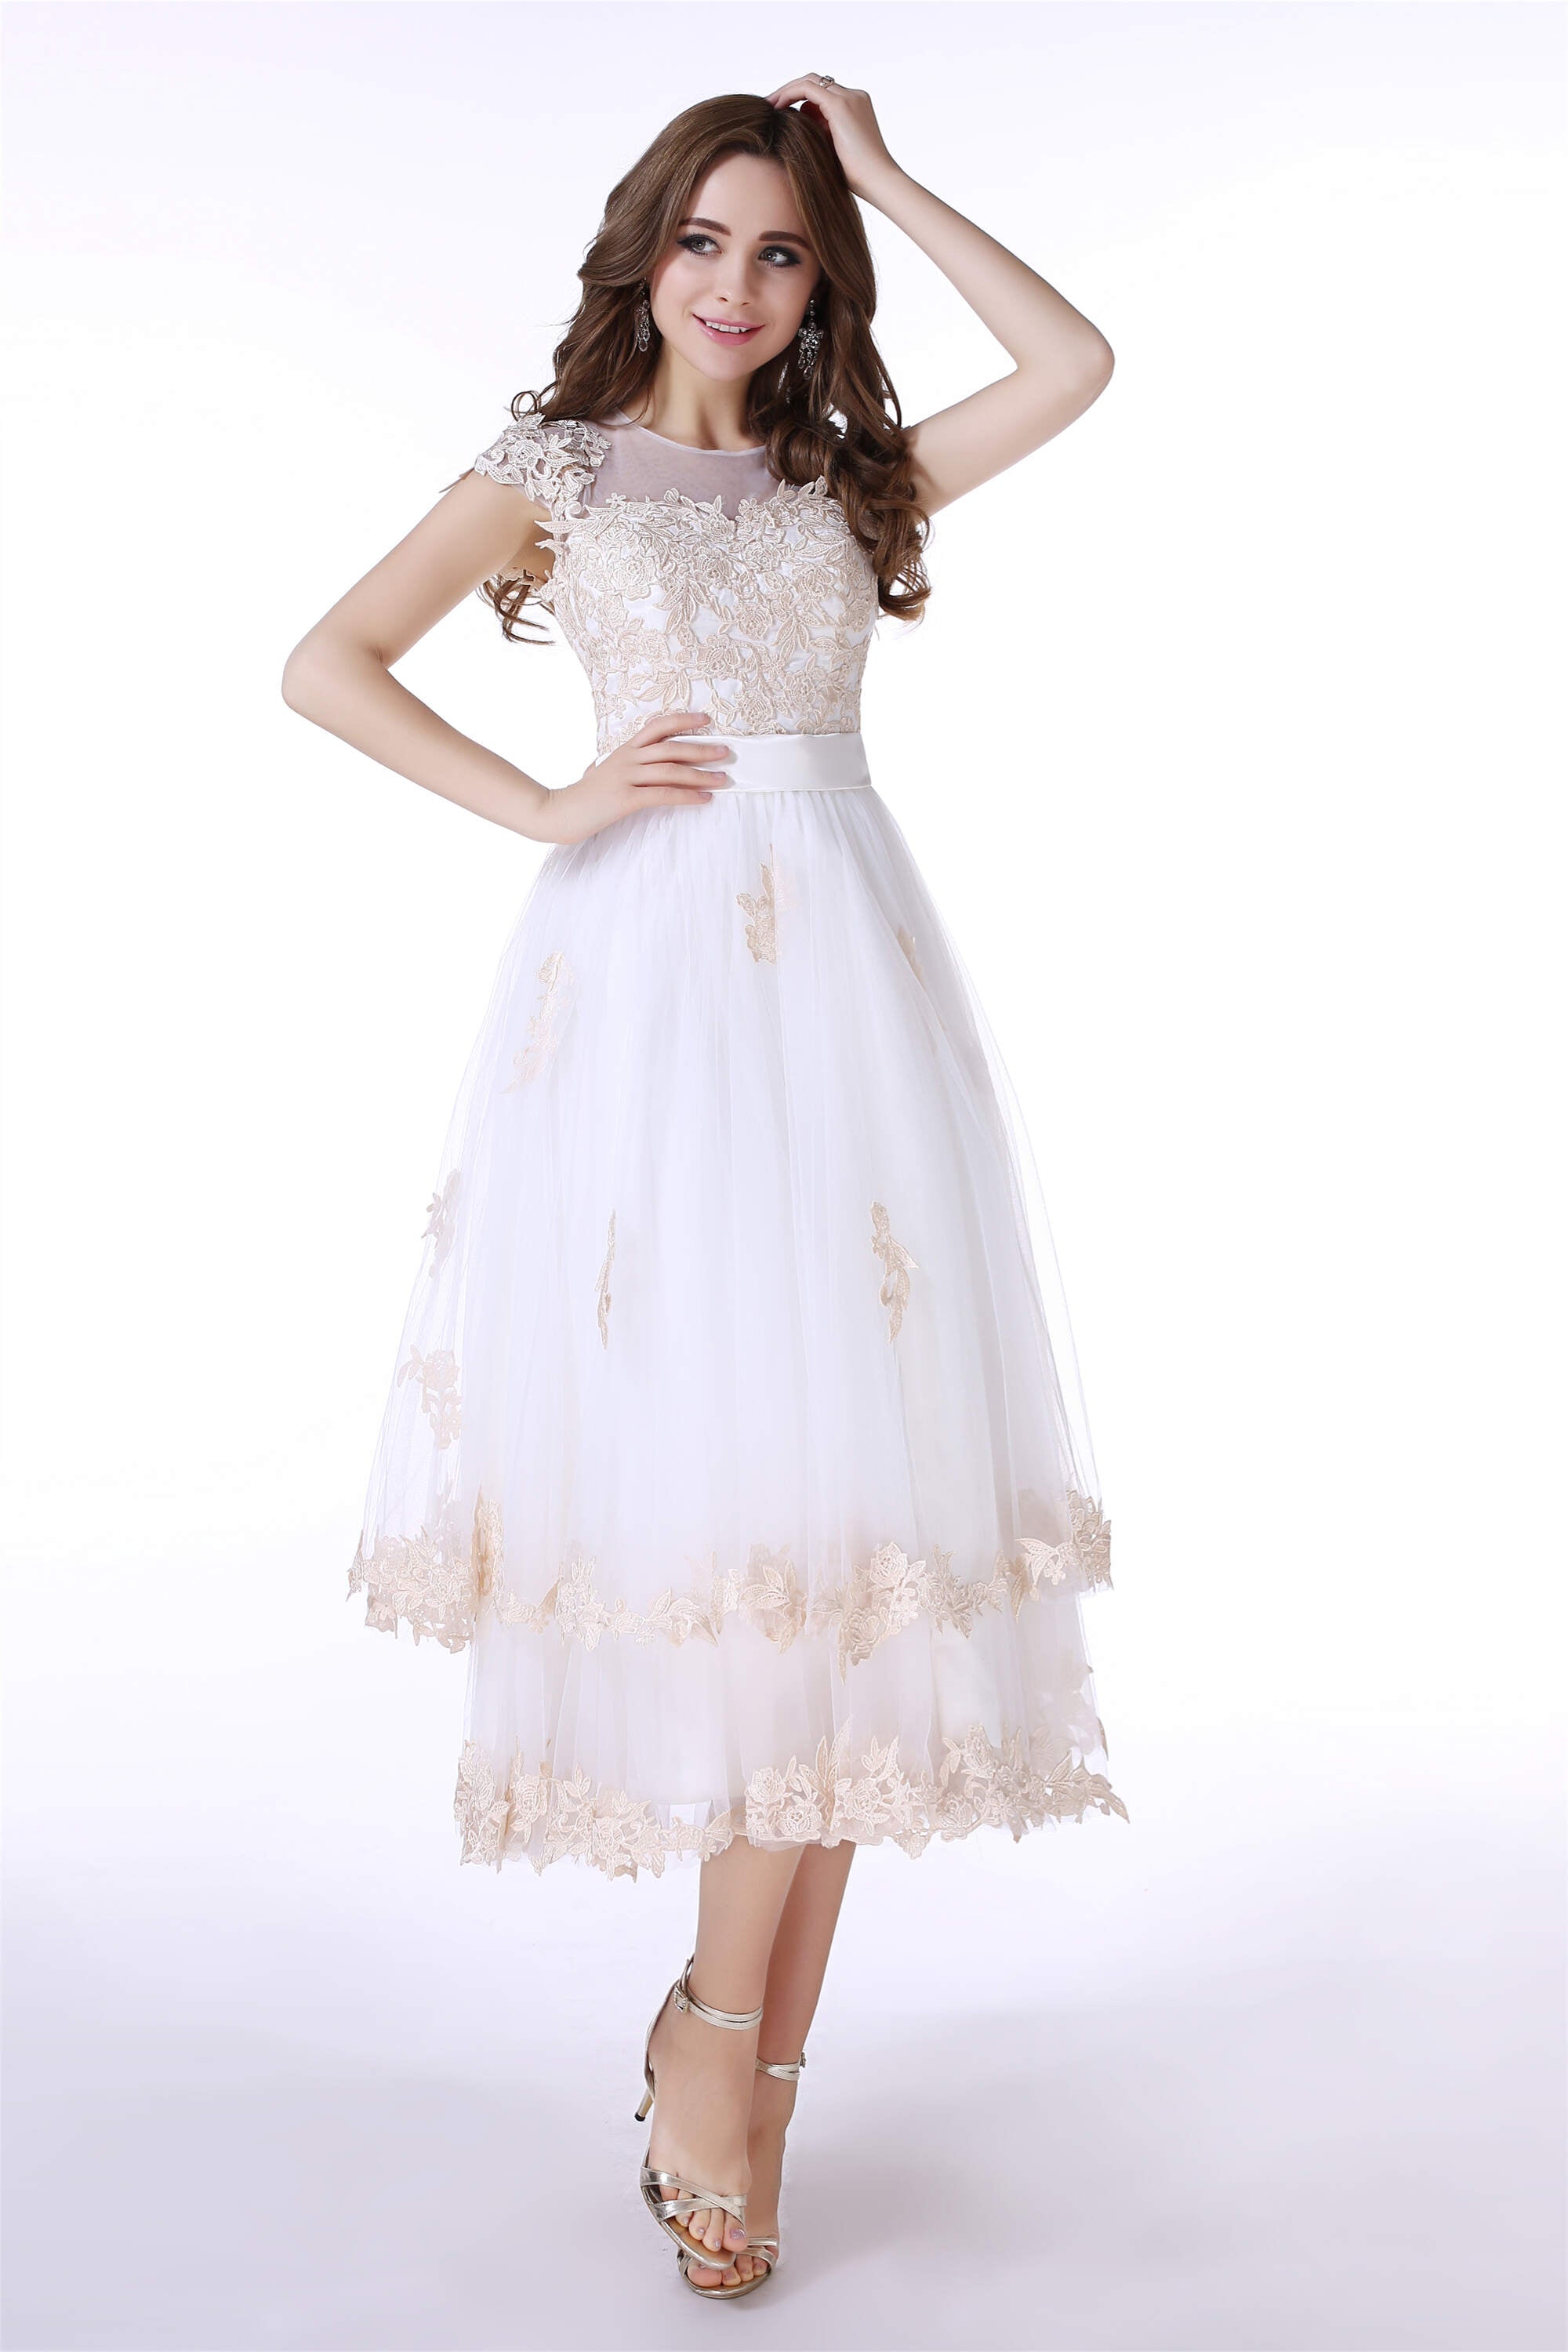 Wedding Dress For Dancing, White Tulle Champagne Lace Tea Length Sleeveless Wedding Dresses